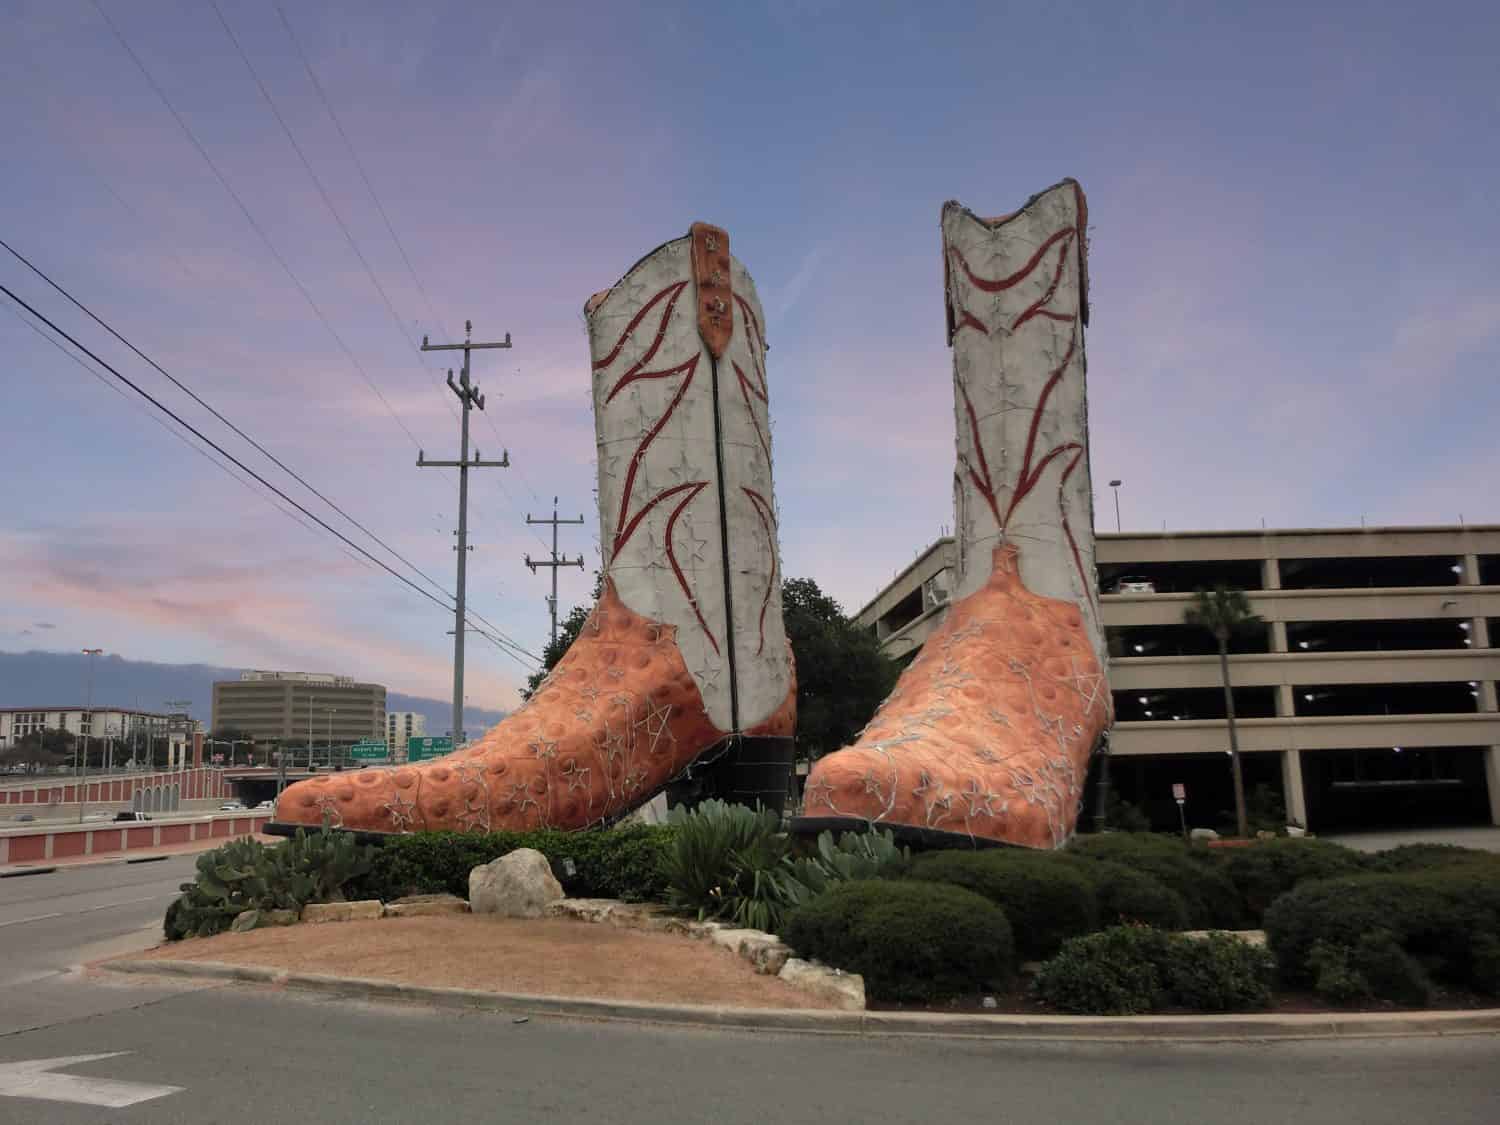 World's largest cowboy boots. Austin, Texas